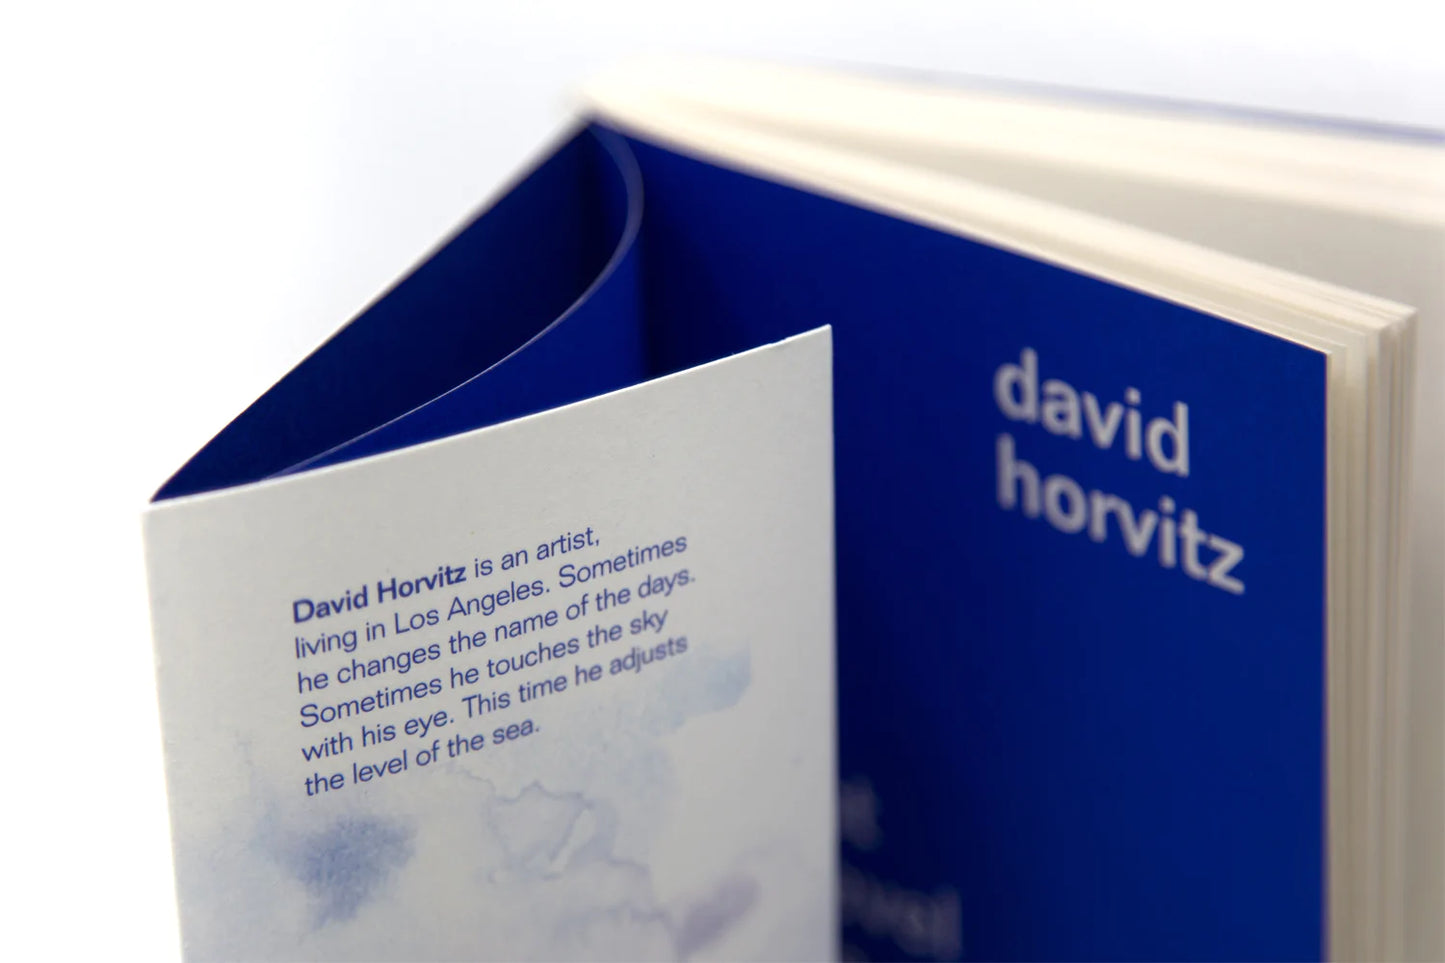 adjust the level of the sea - David Horvitz